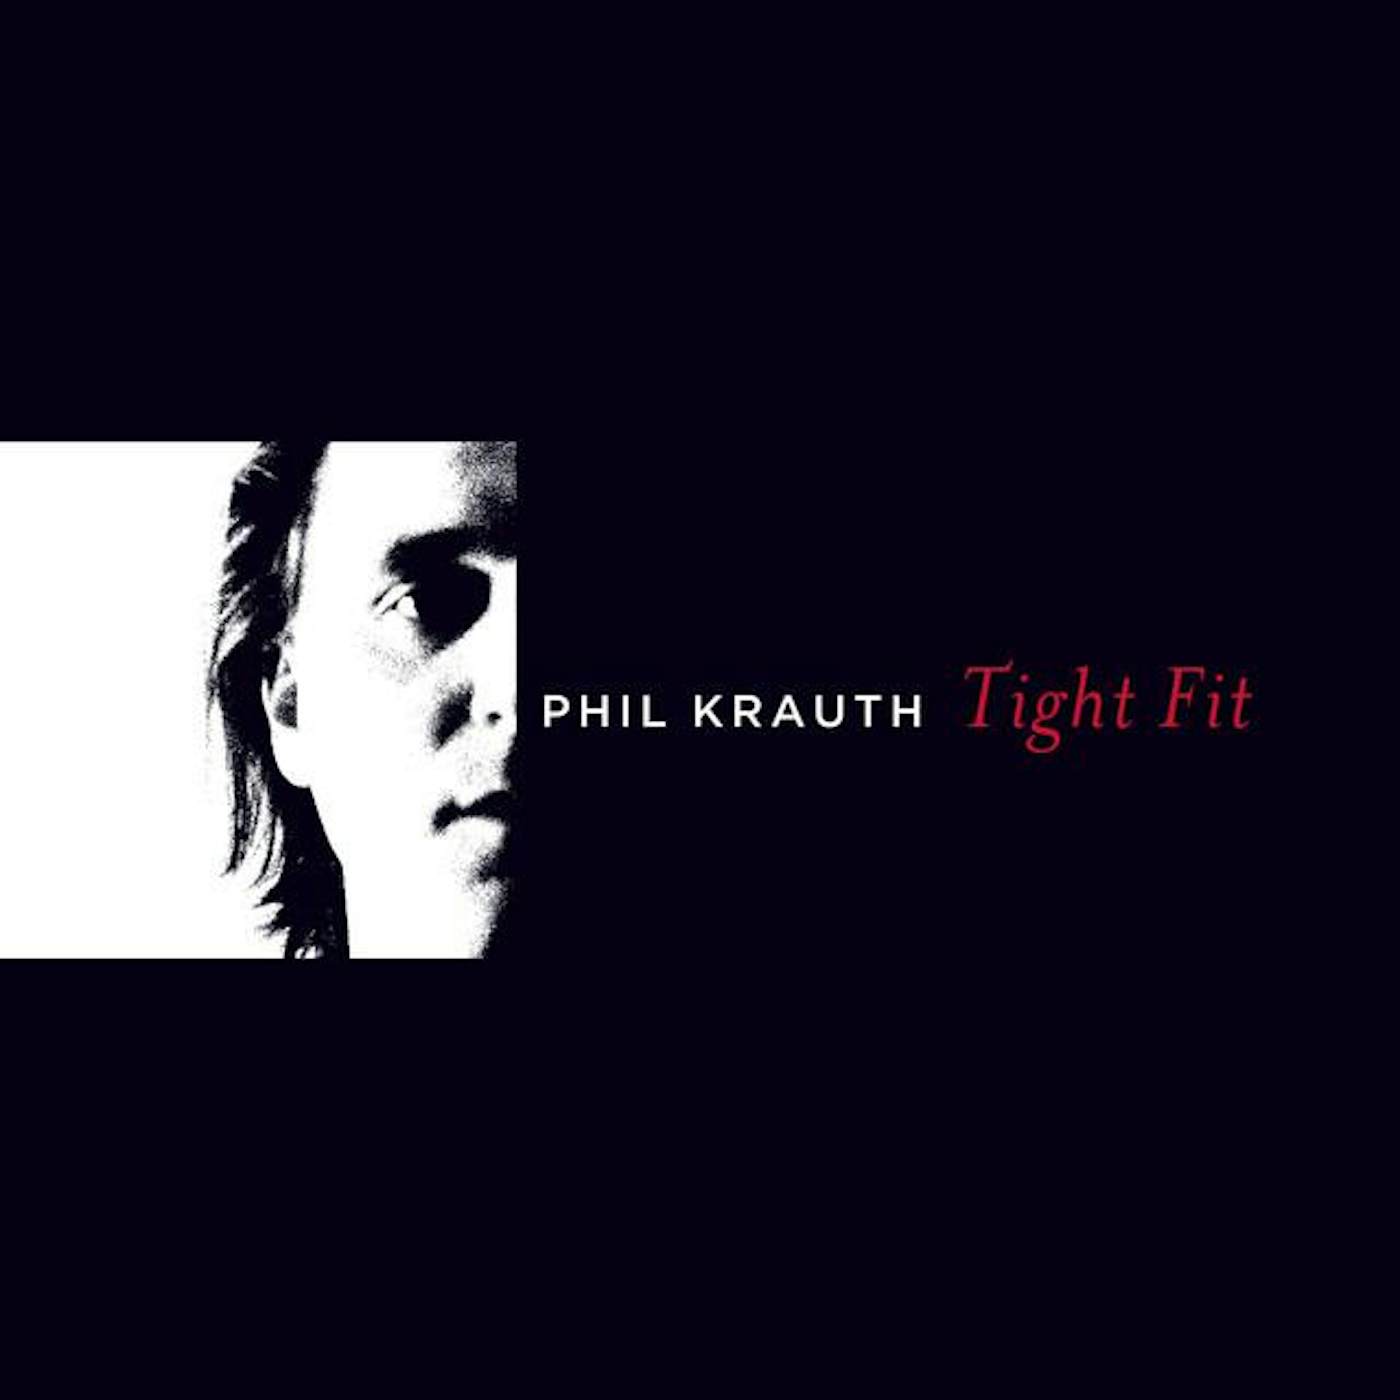 Phil Krauth